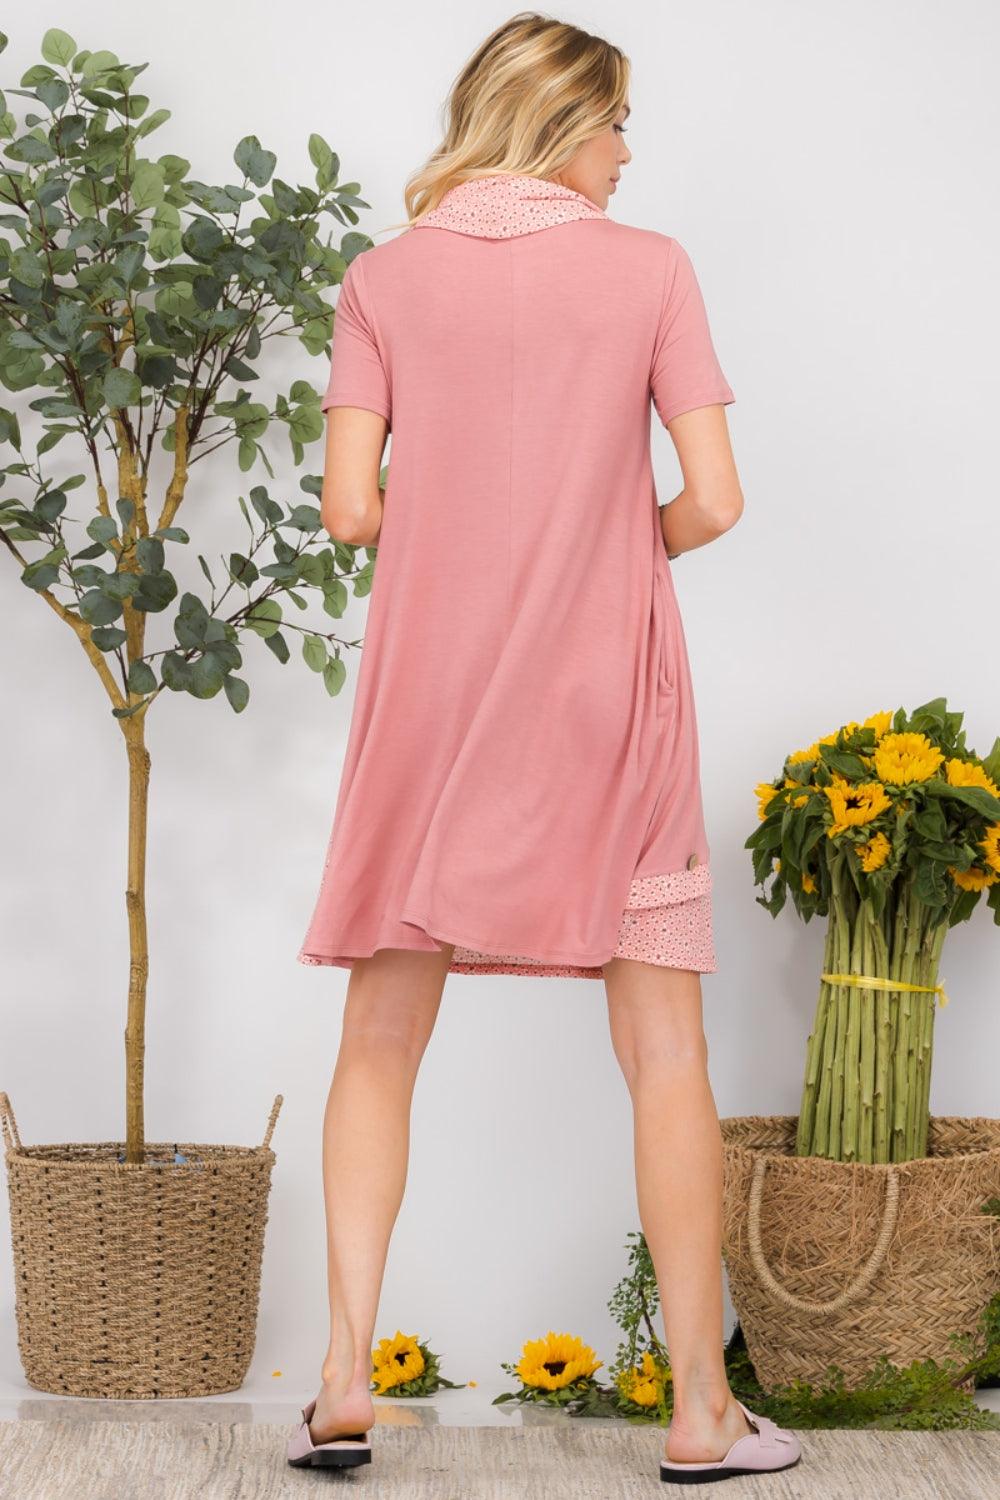 Celeste Full Size Decor Button Short Sleeve Dress with Pockets - AMIClubwear